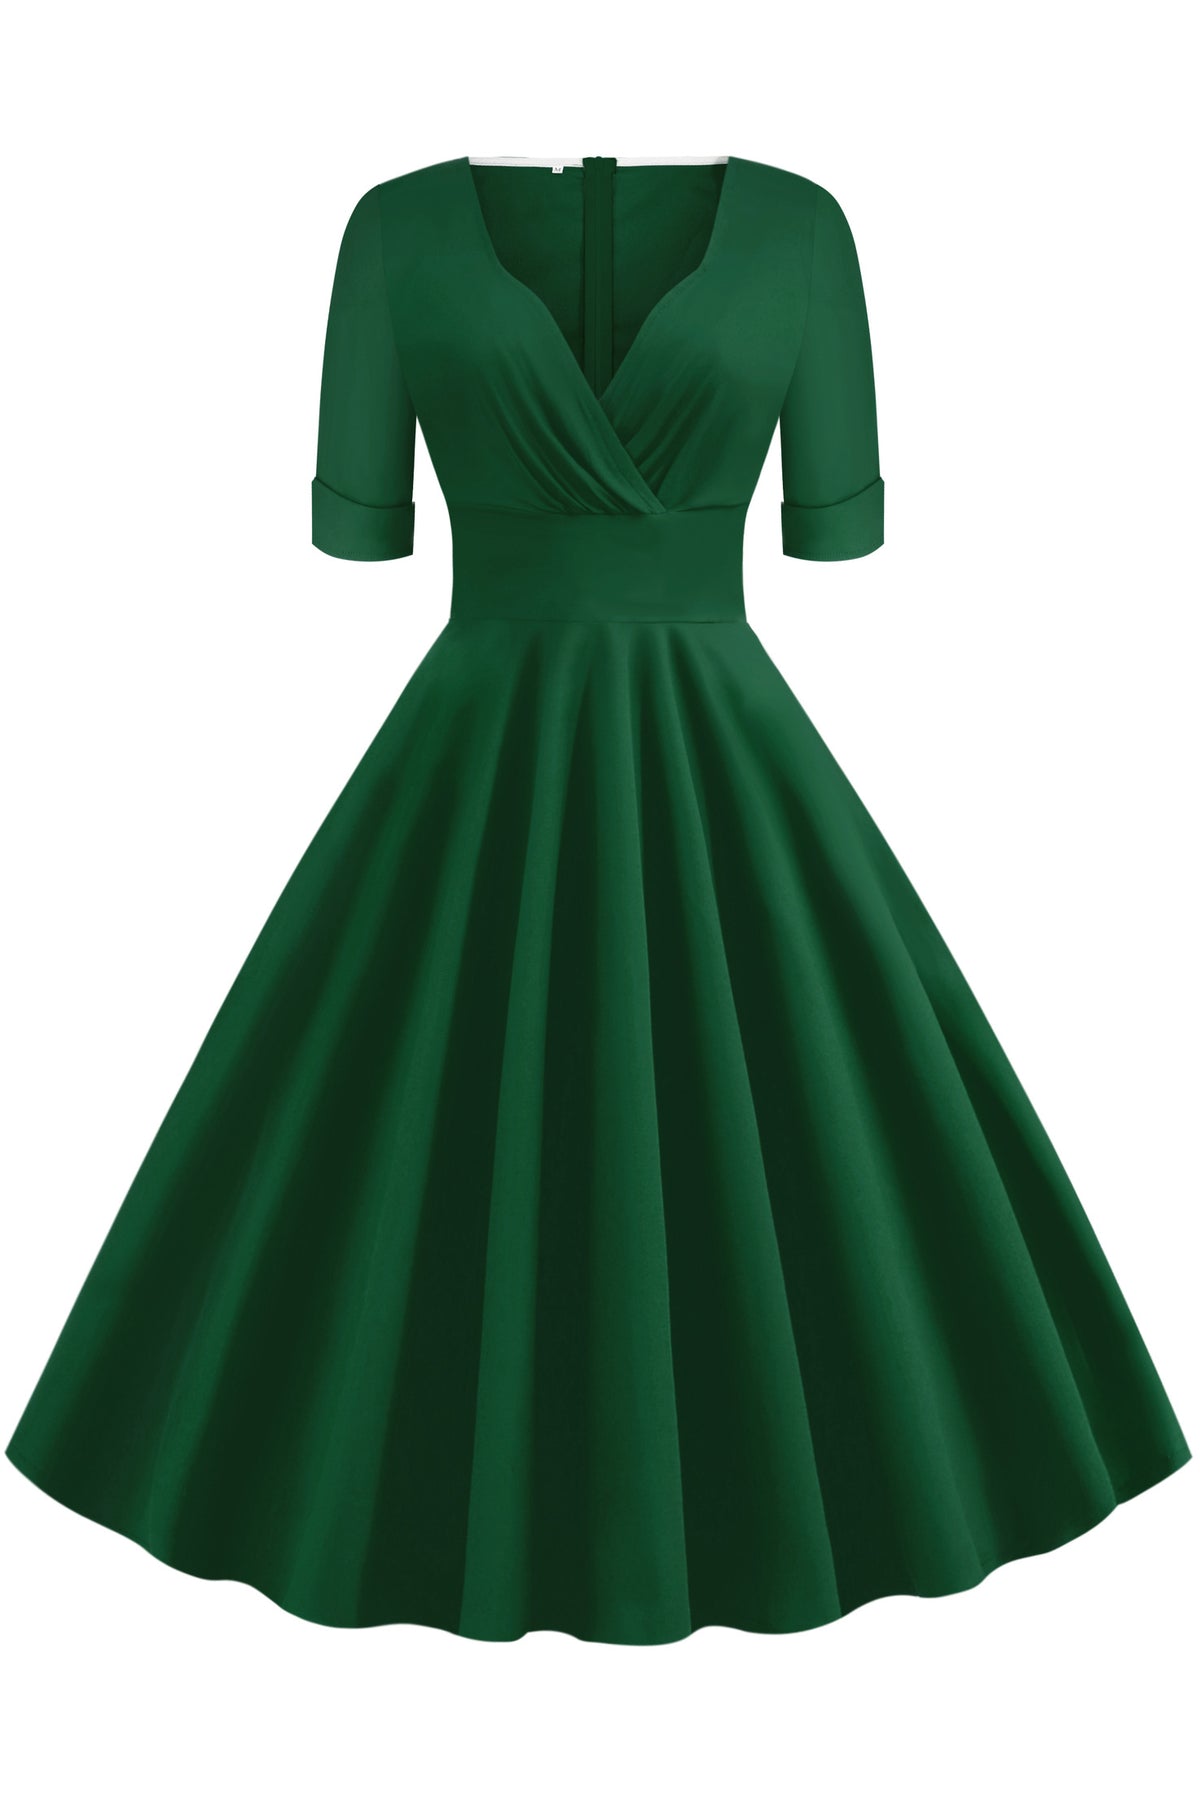 Green Surplice A-line Short Sleeves Vintage Dress